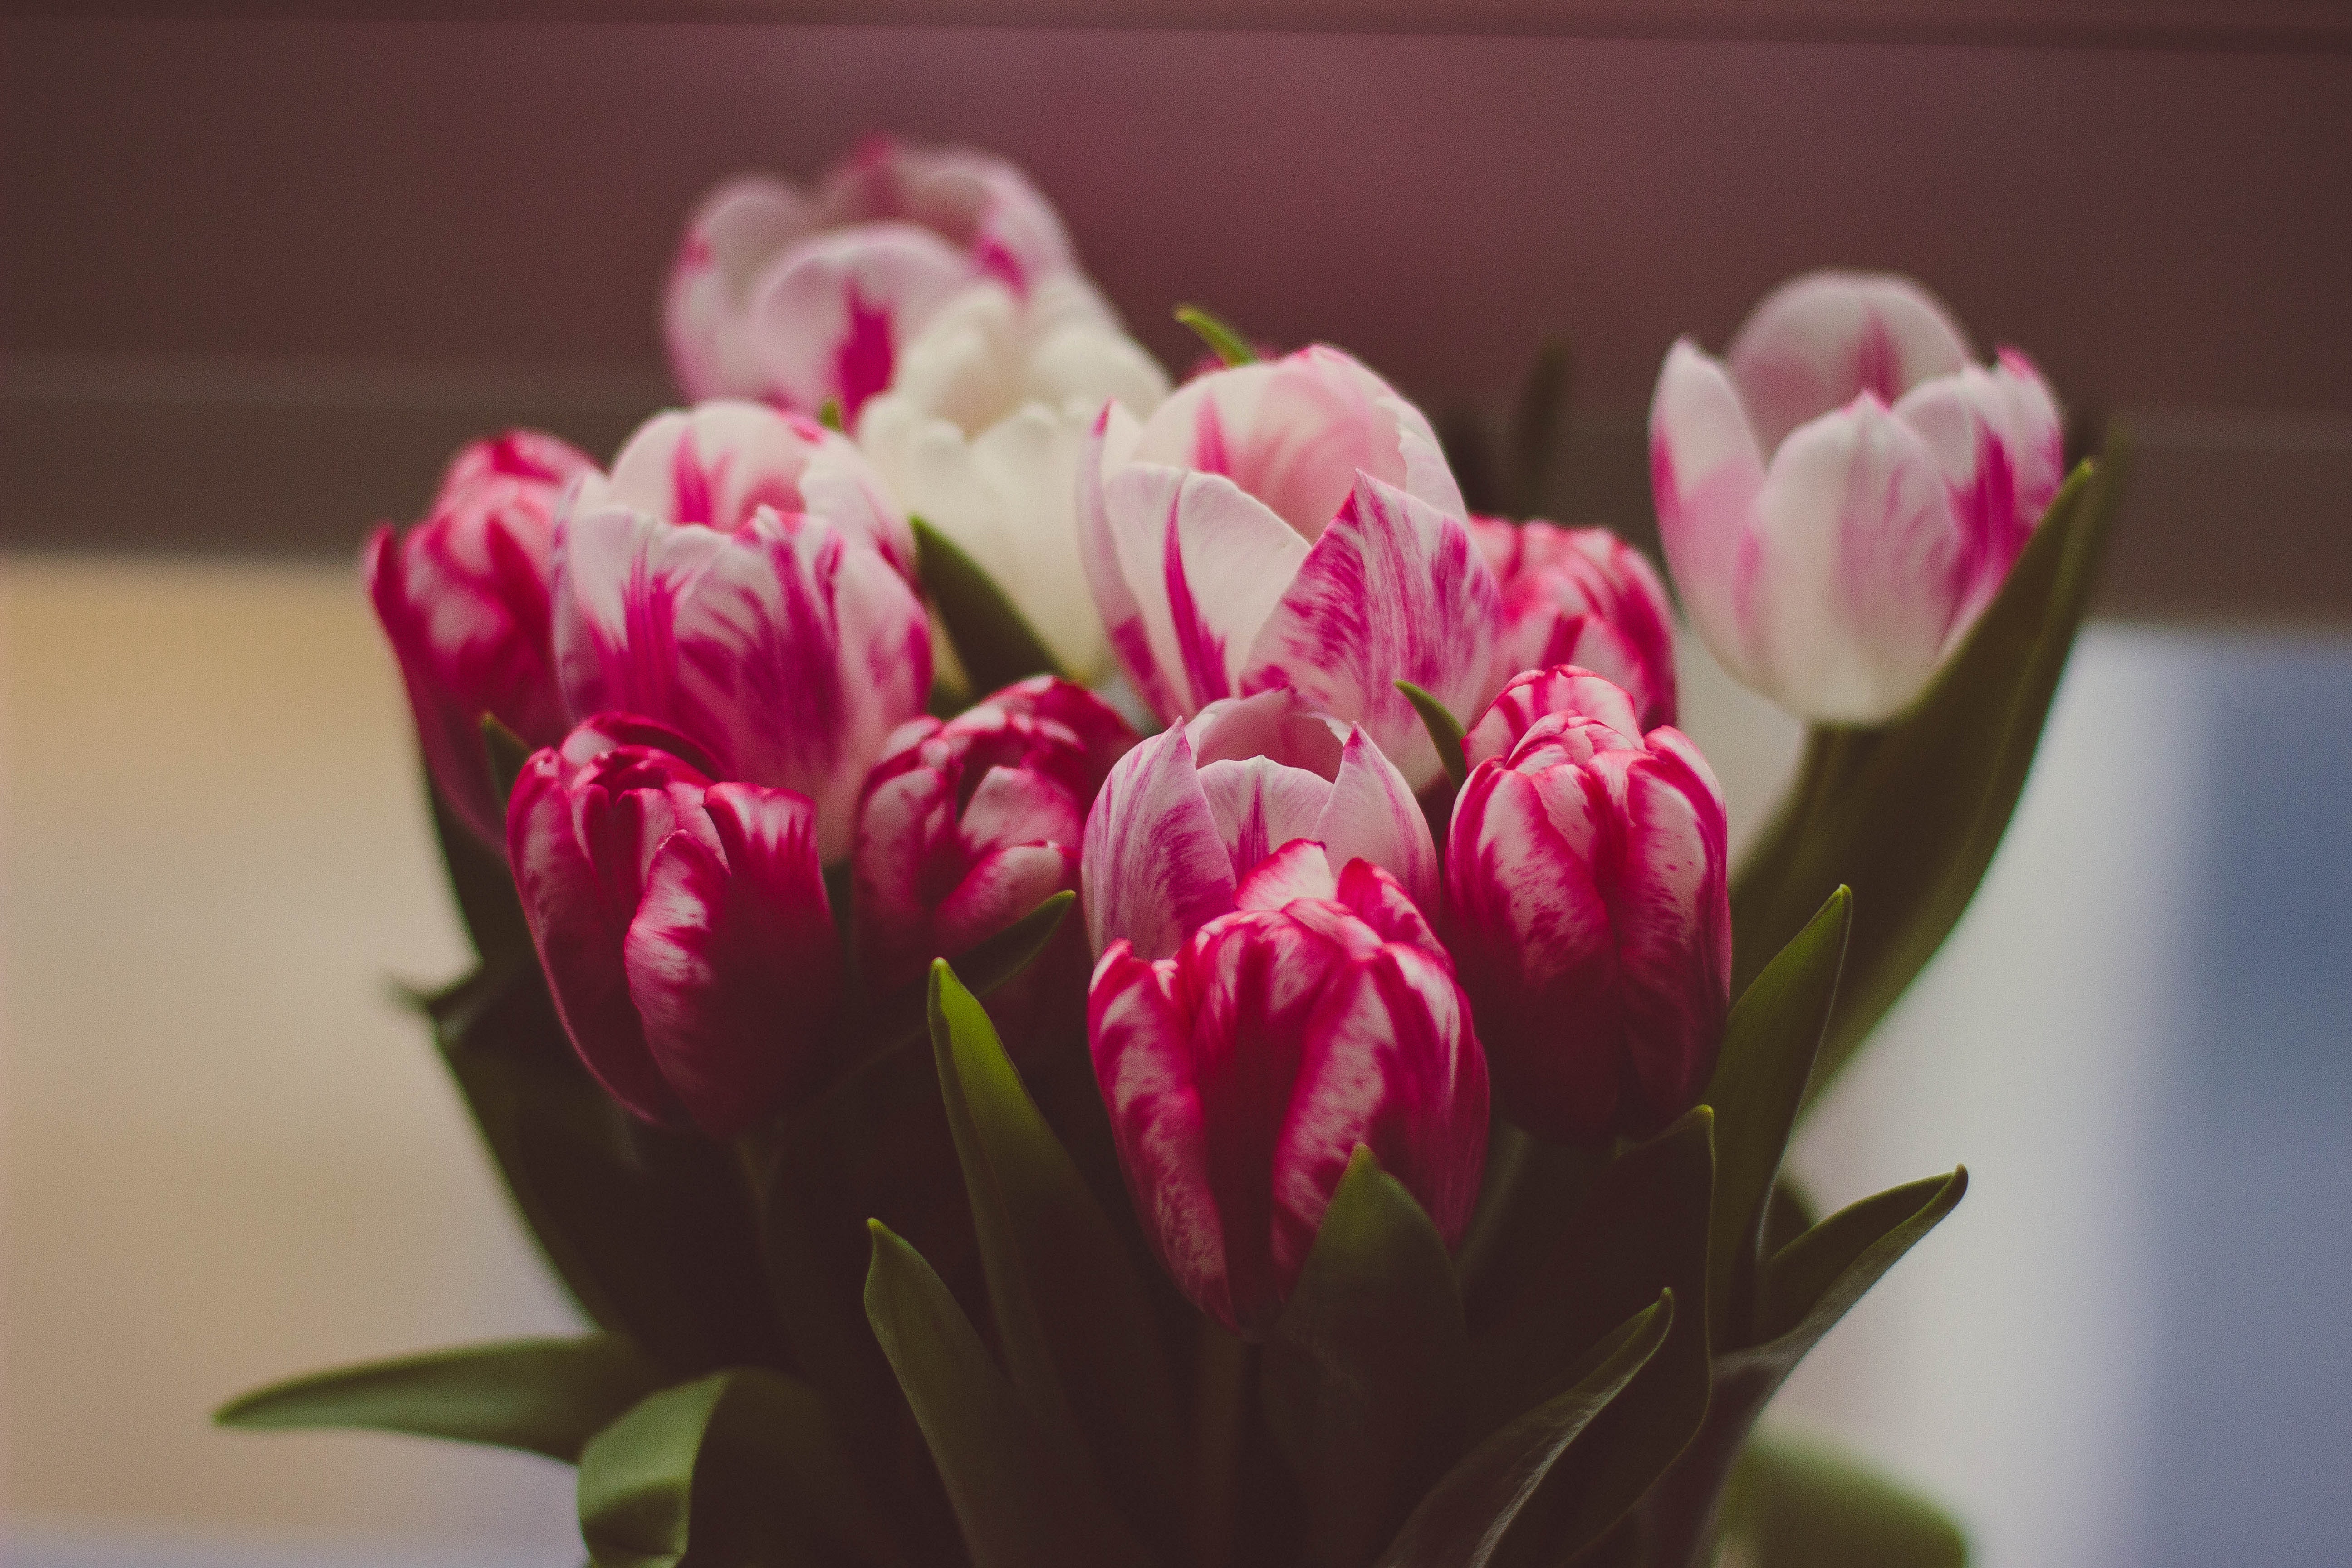 1000+ Beautiful Bunch Of Flowers Photos · Pexels · Free Stock Photos